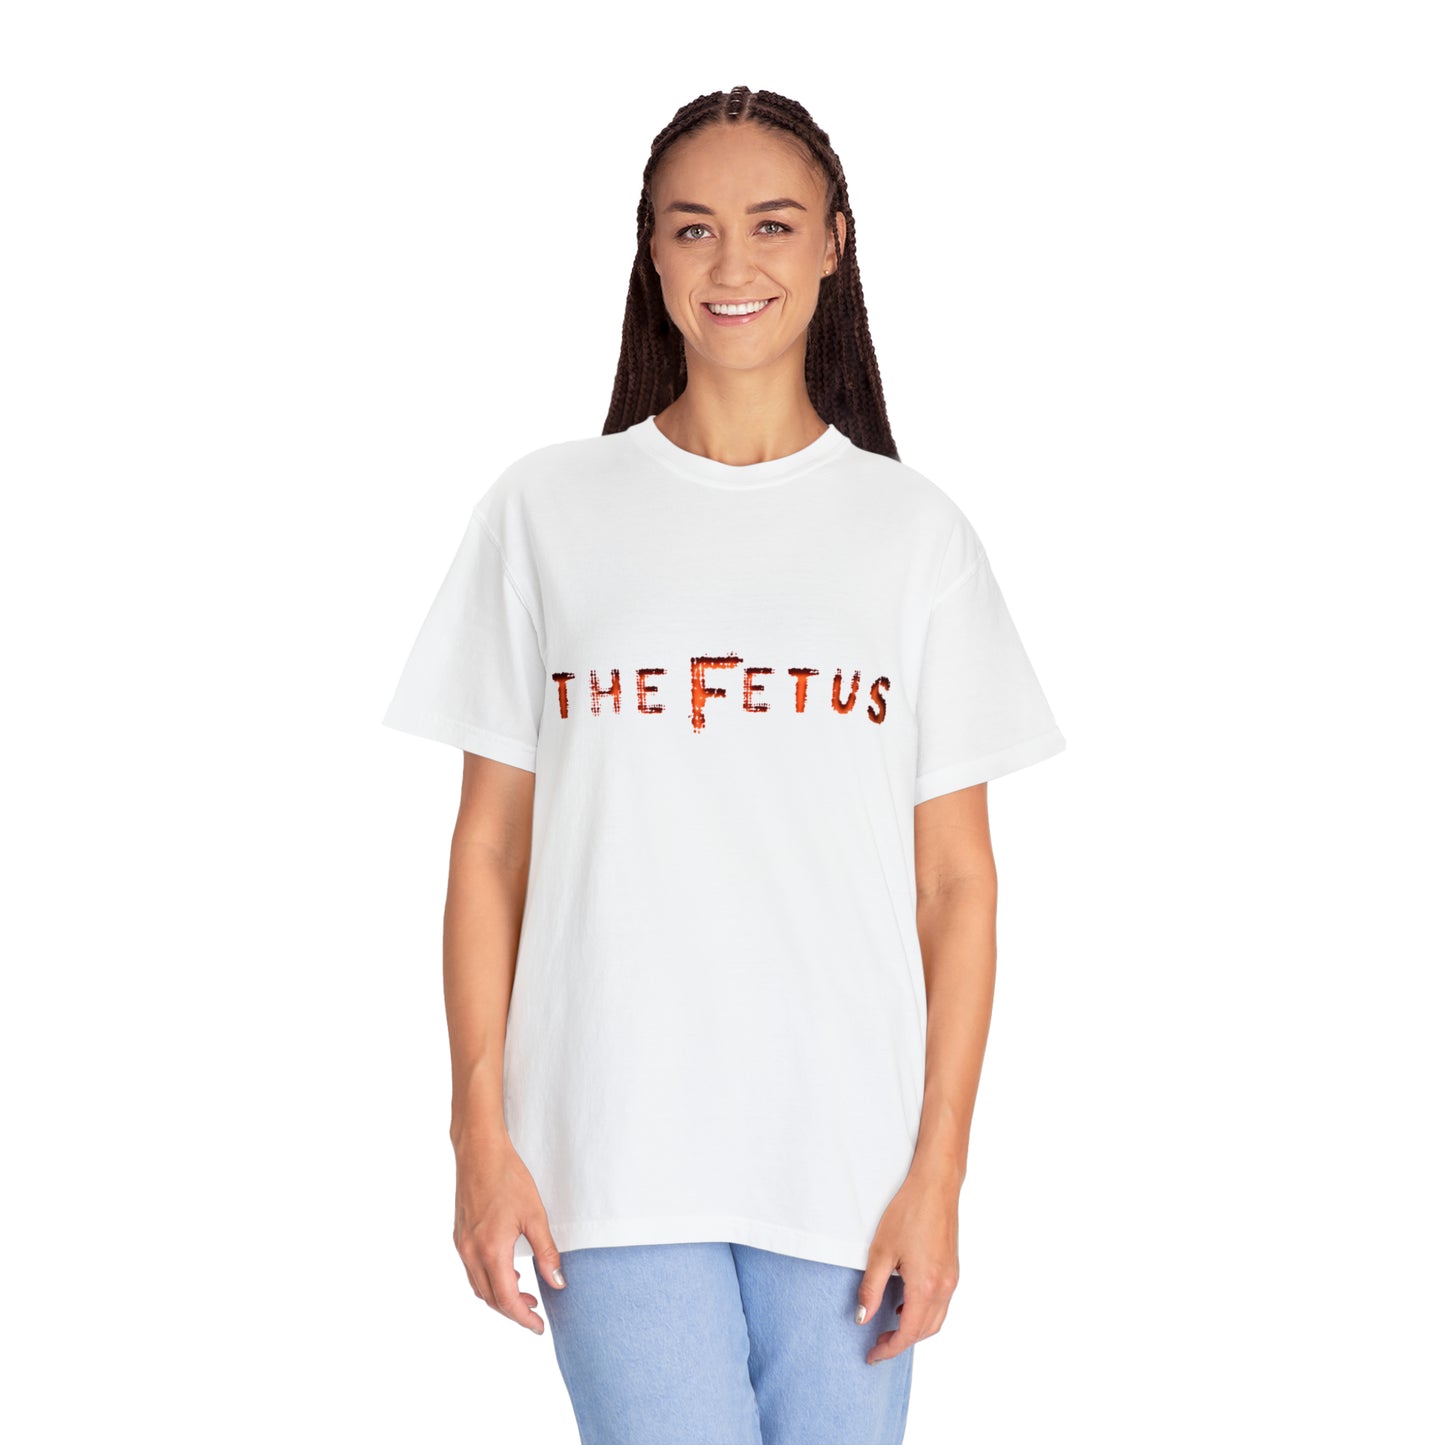 The Fetus T-Shirt